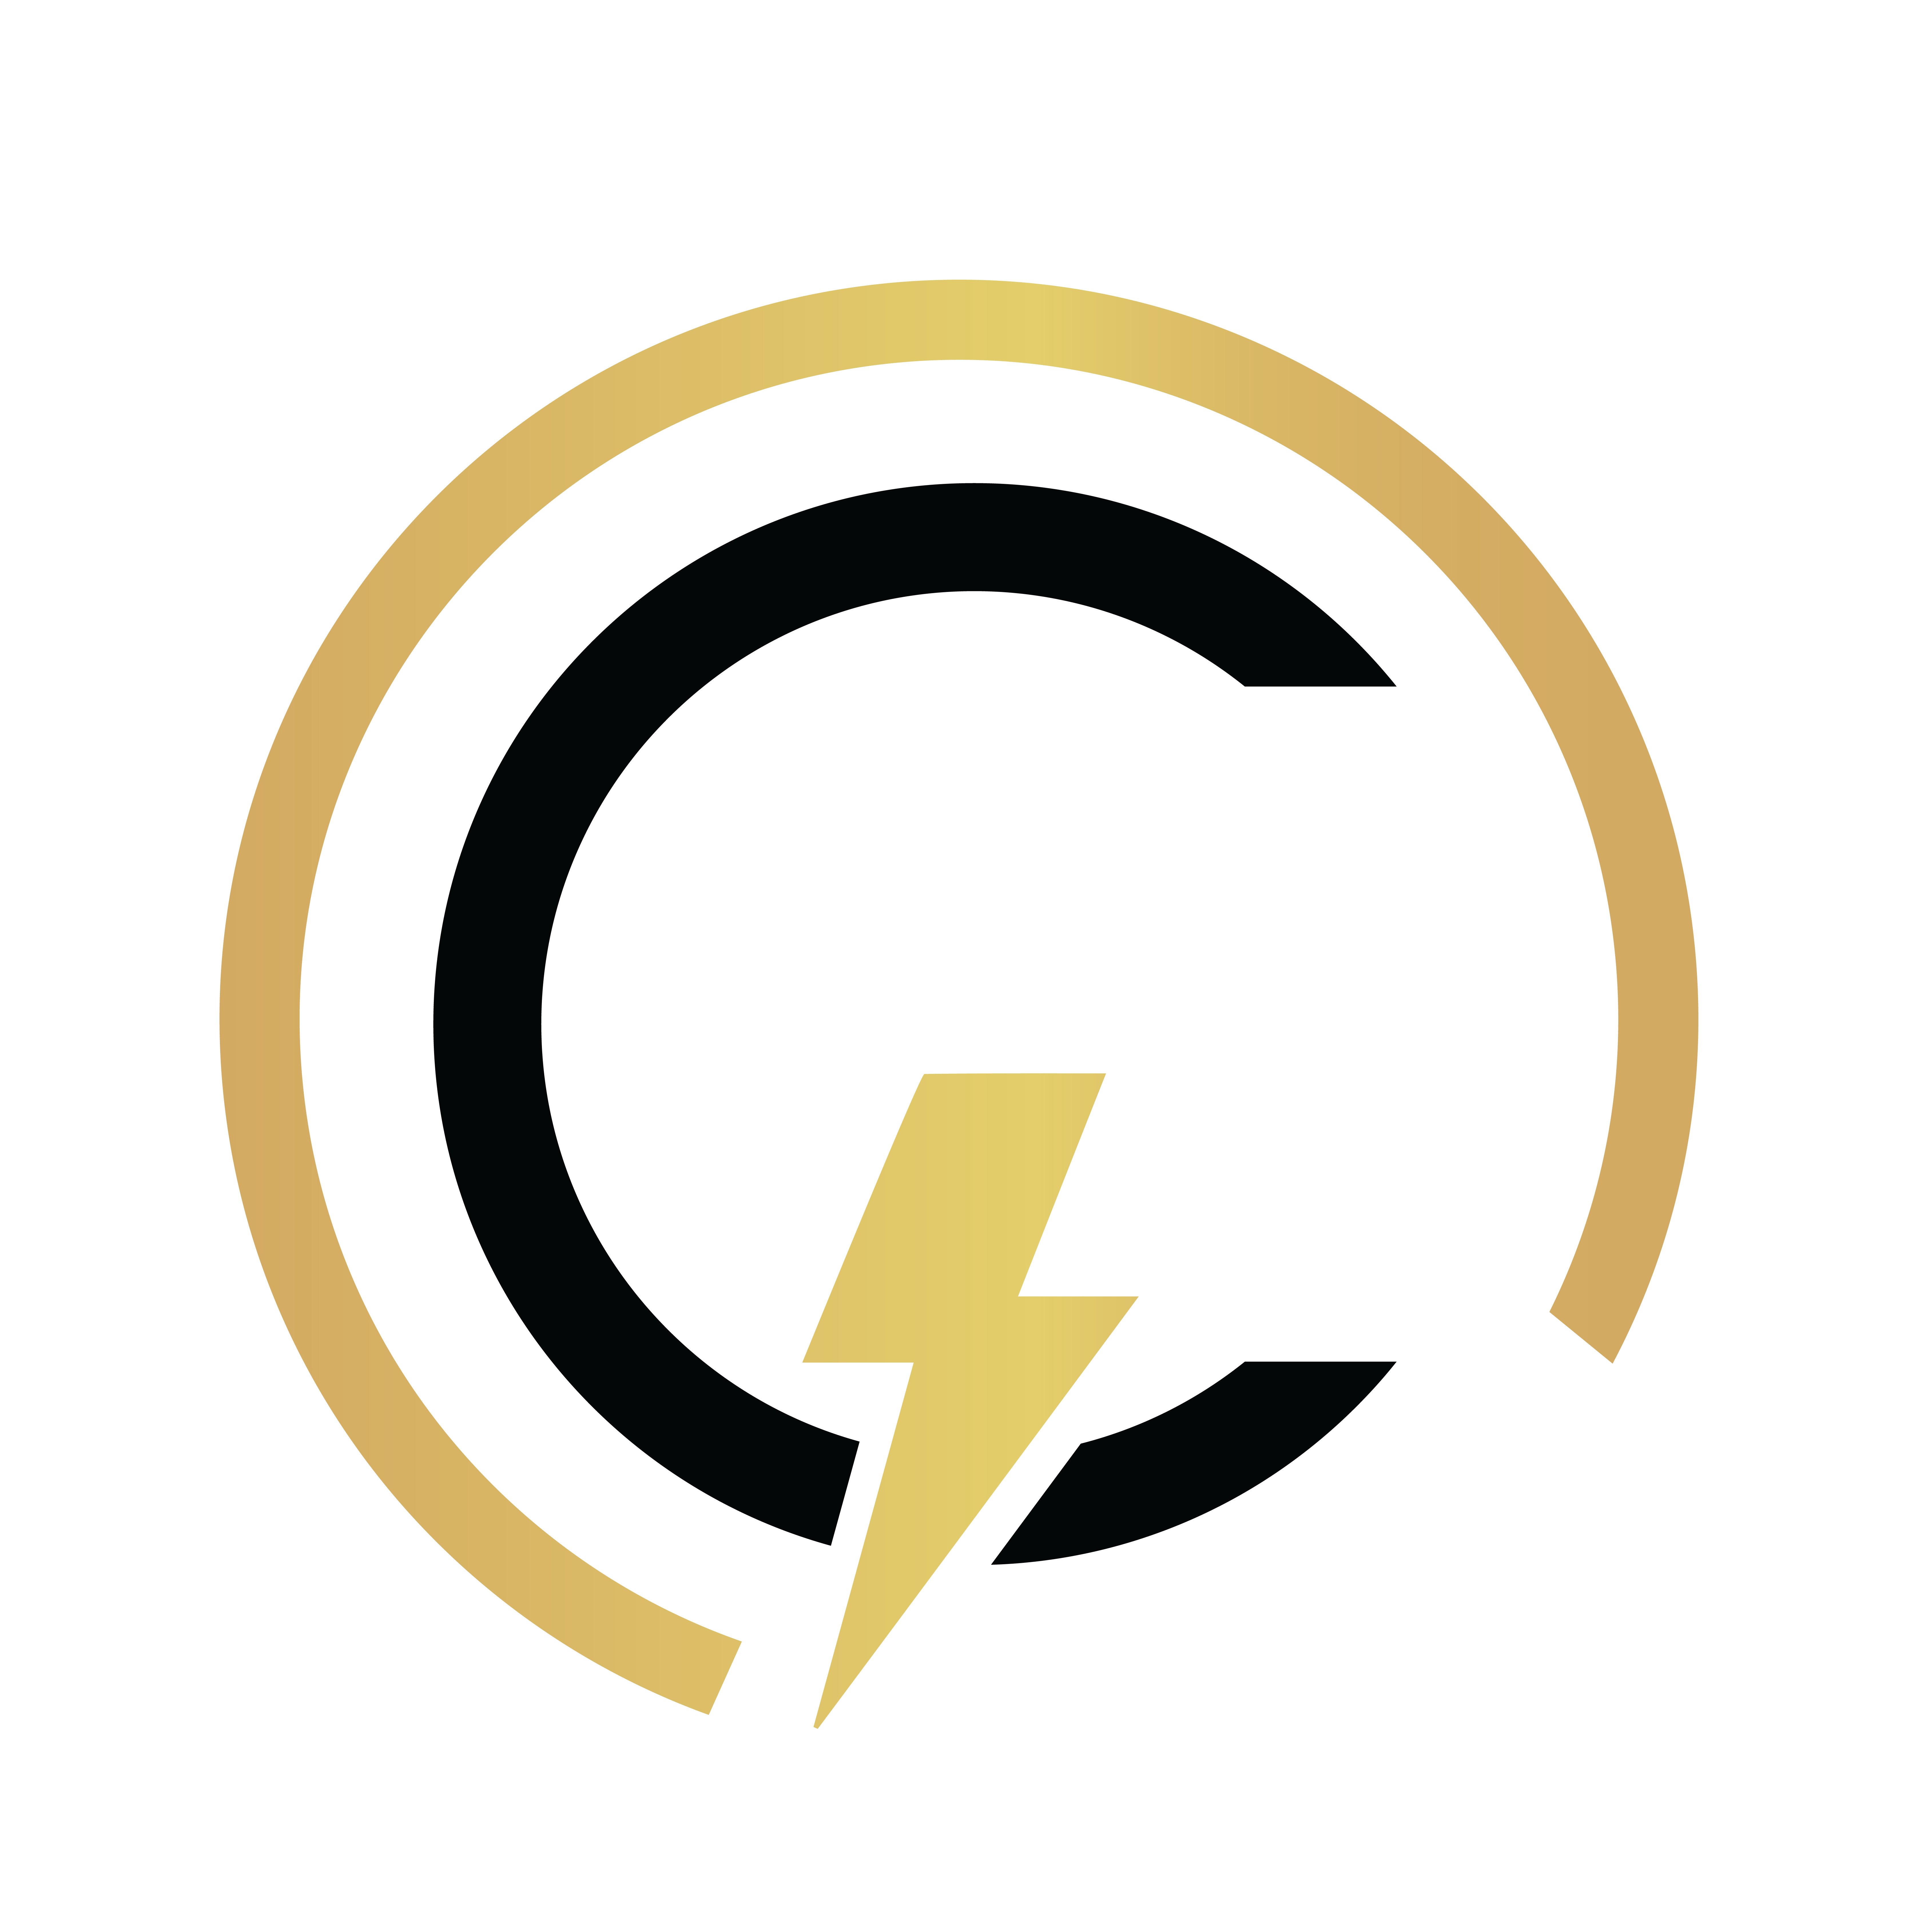 Trademark Logo CURRENT